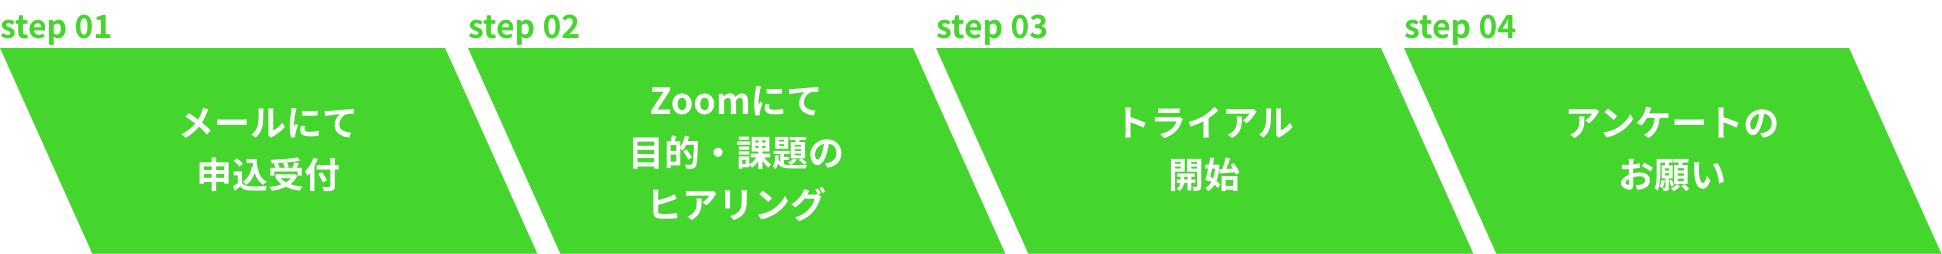 step 01 メールにて申込受付 / step 02 Zoomにて目的・課題のヒアリング / step 03 トライアル開始 / step 04 アンケートのお願い